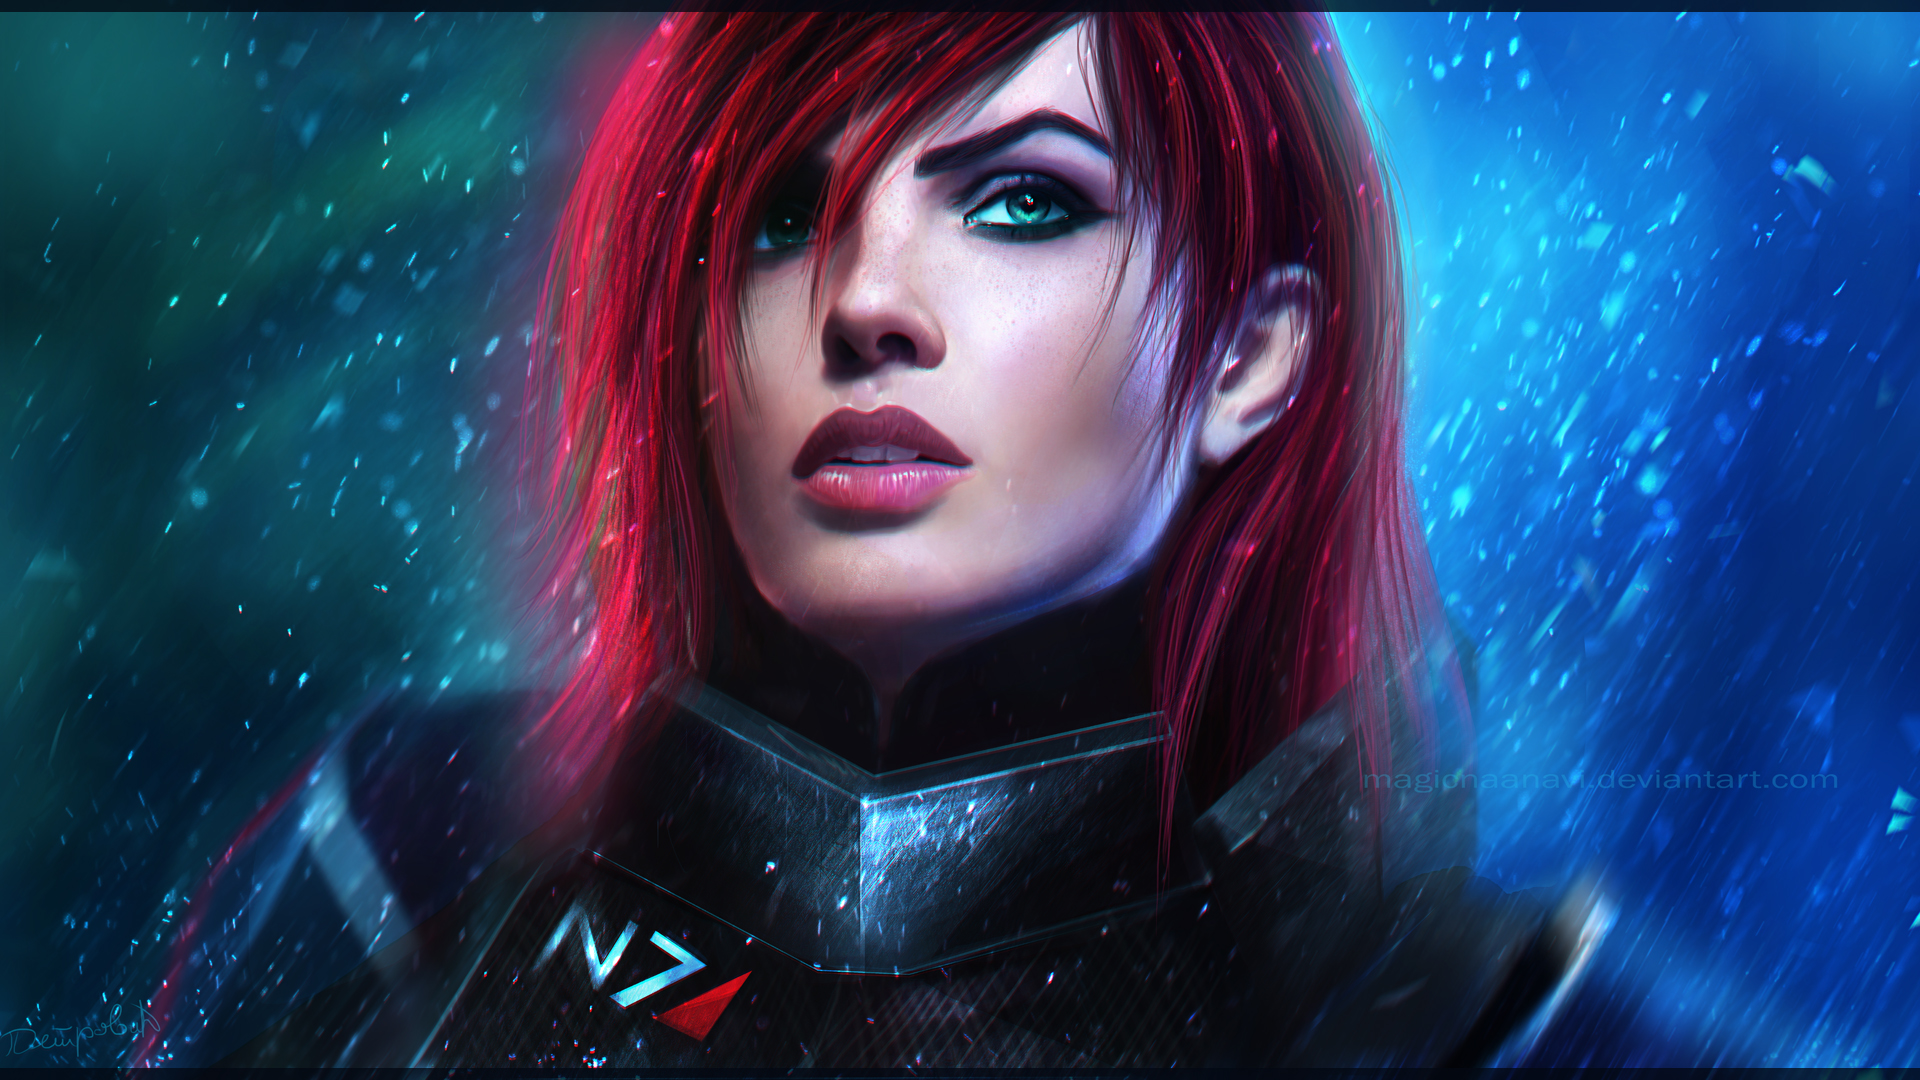 340 Mass Effect 3 HD Wallpapers | Backgrounds - Wallpaper Abyss